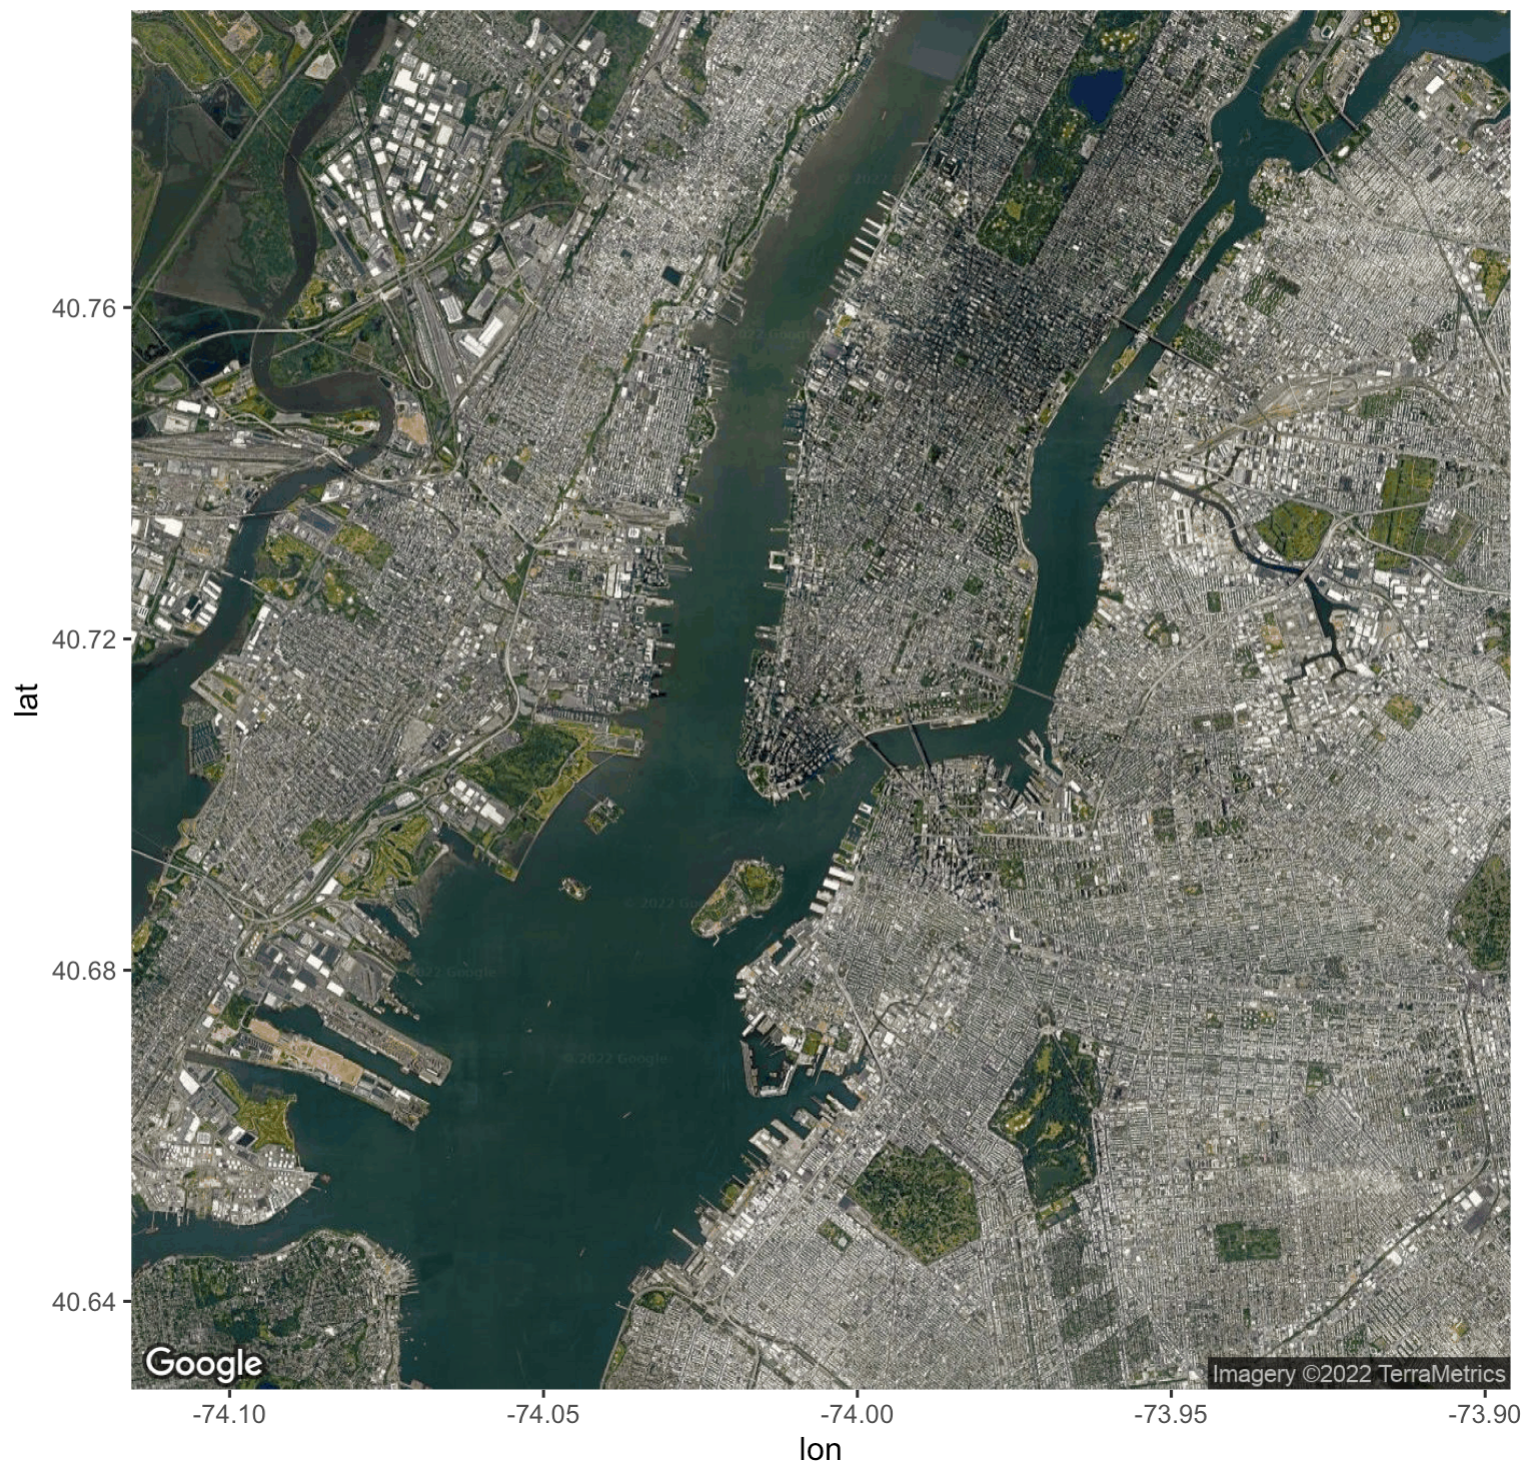 Image 4 - Satellite map of New York City